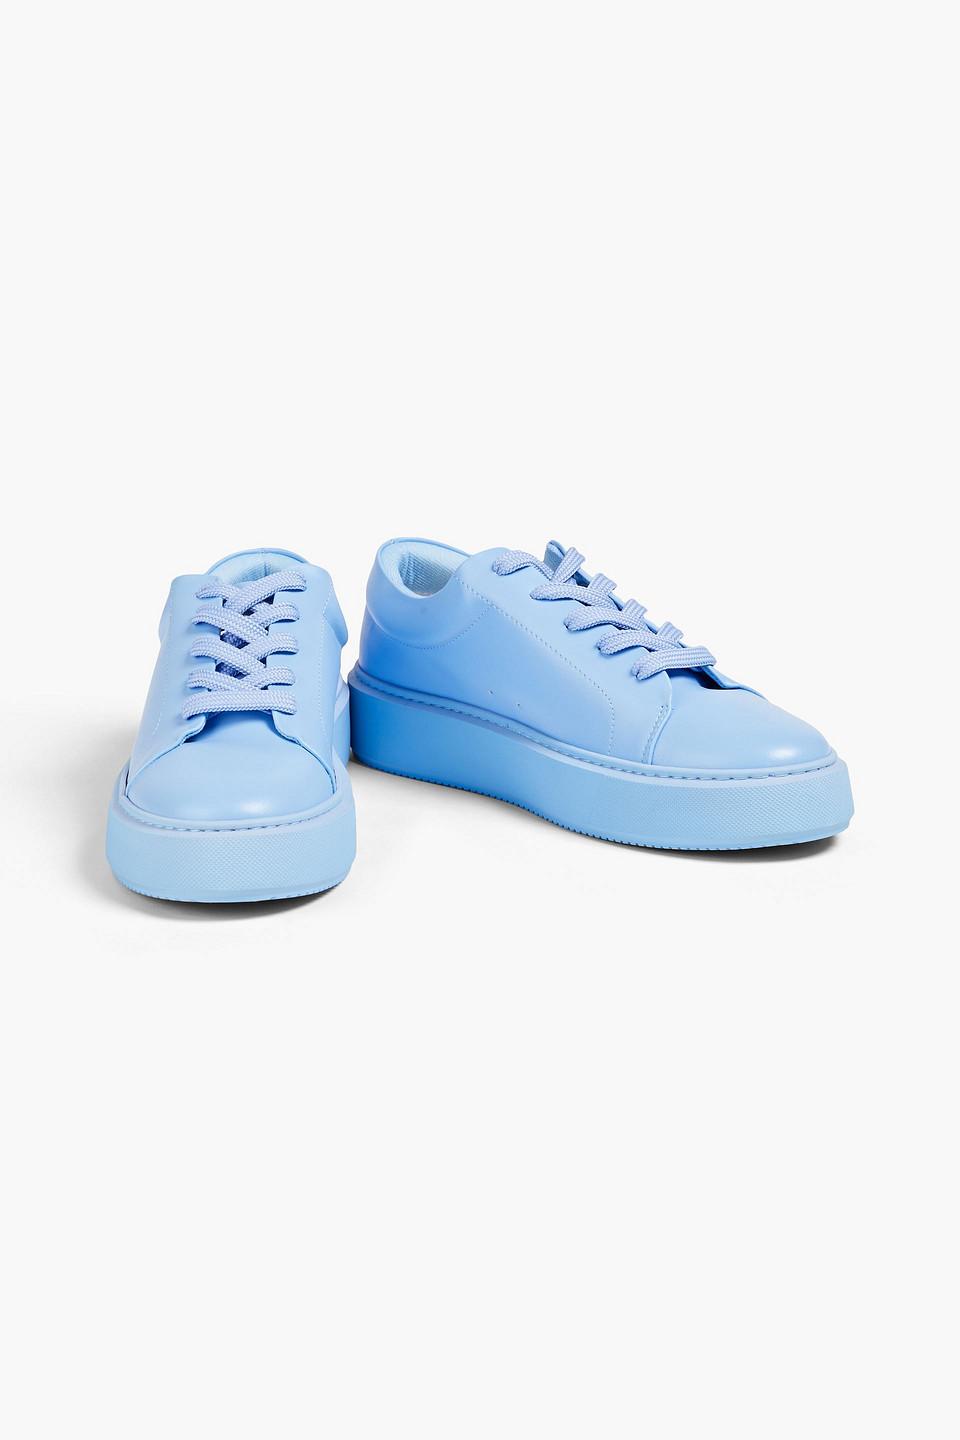 Ganni Faux Leather Sneakers in Blue | Lyst UK